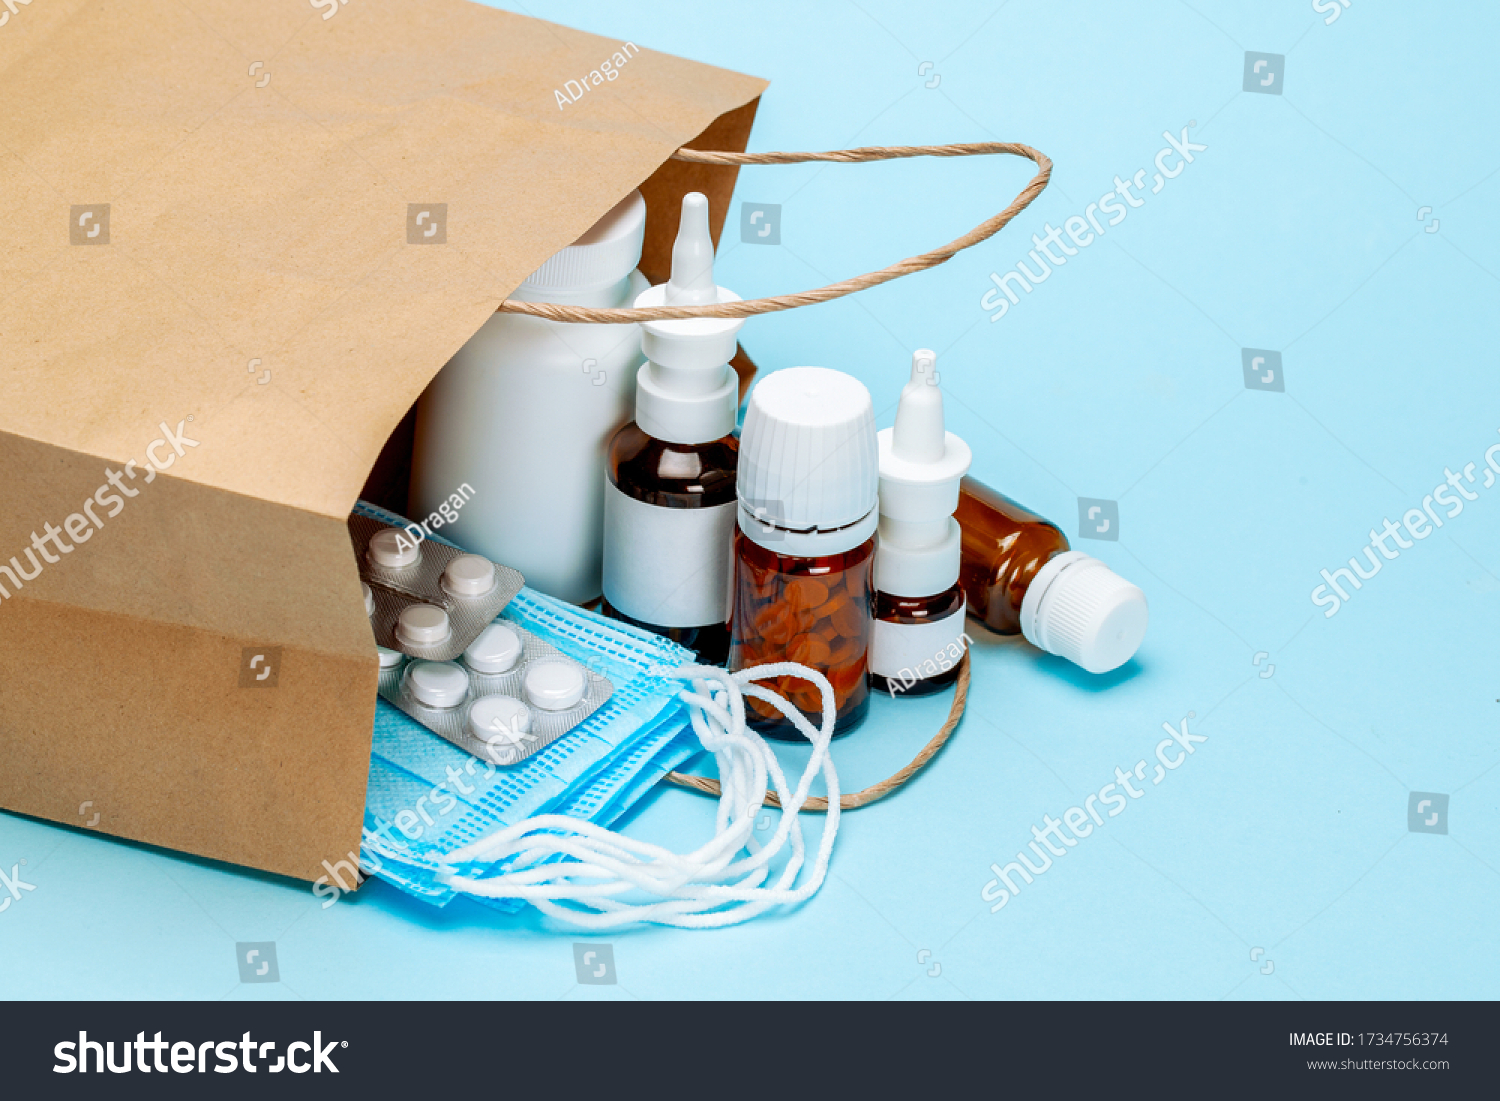 Order medicines online and delivery. Pack of medicines, pills and masks. #1734756374